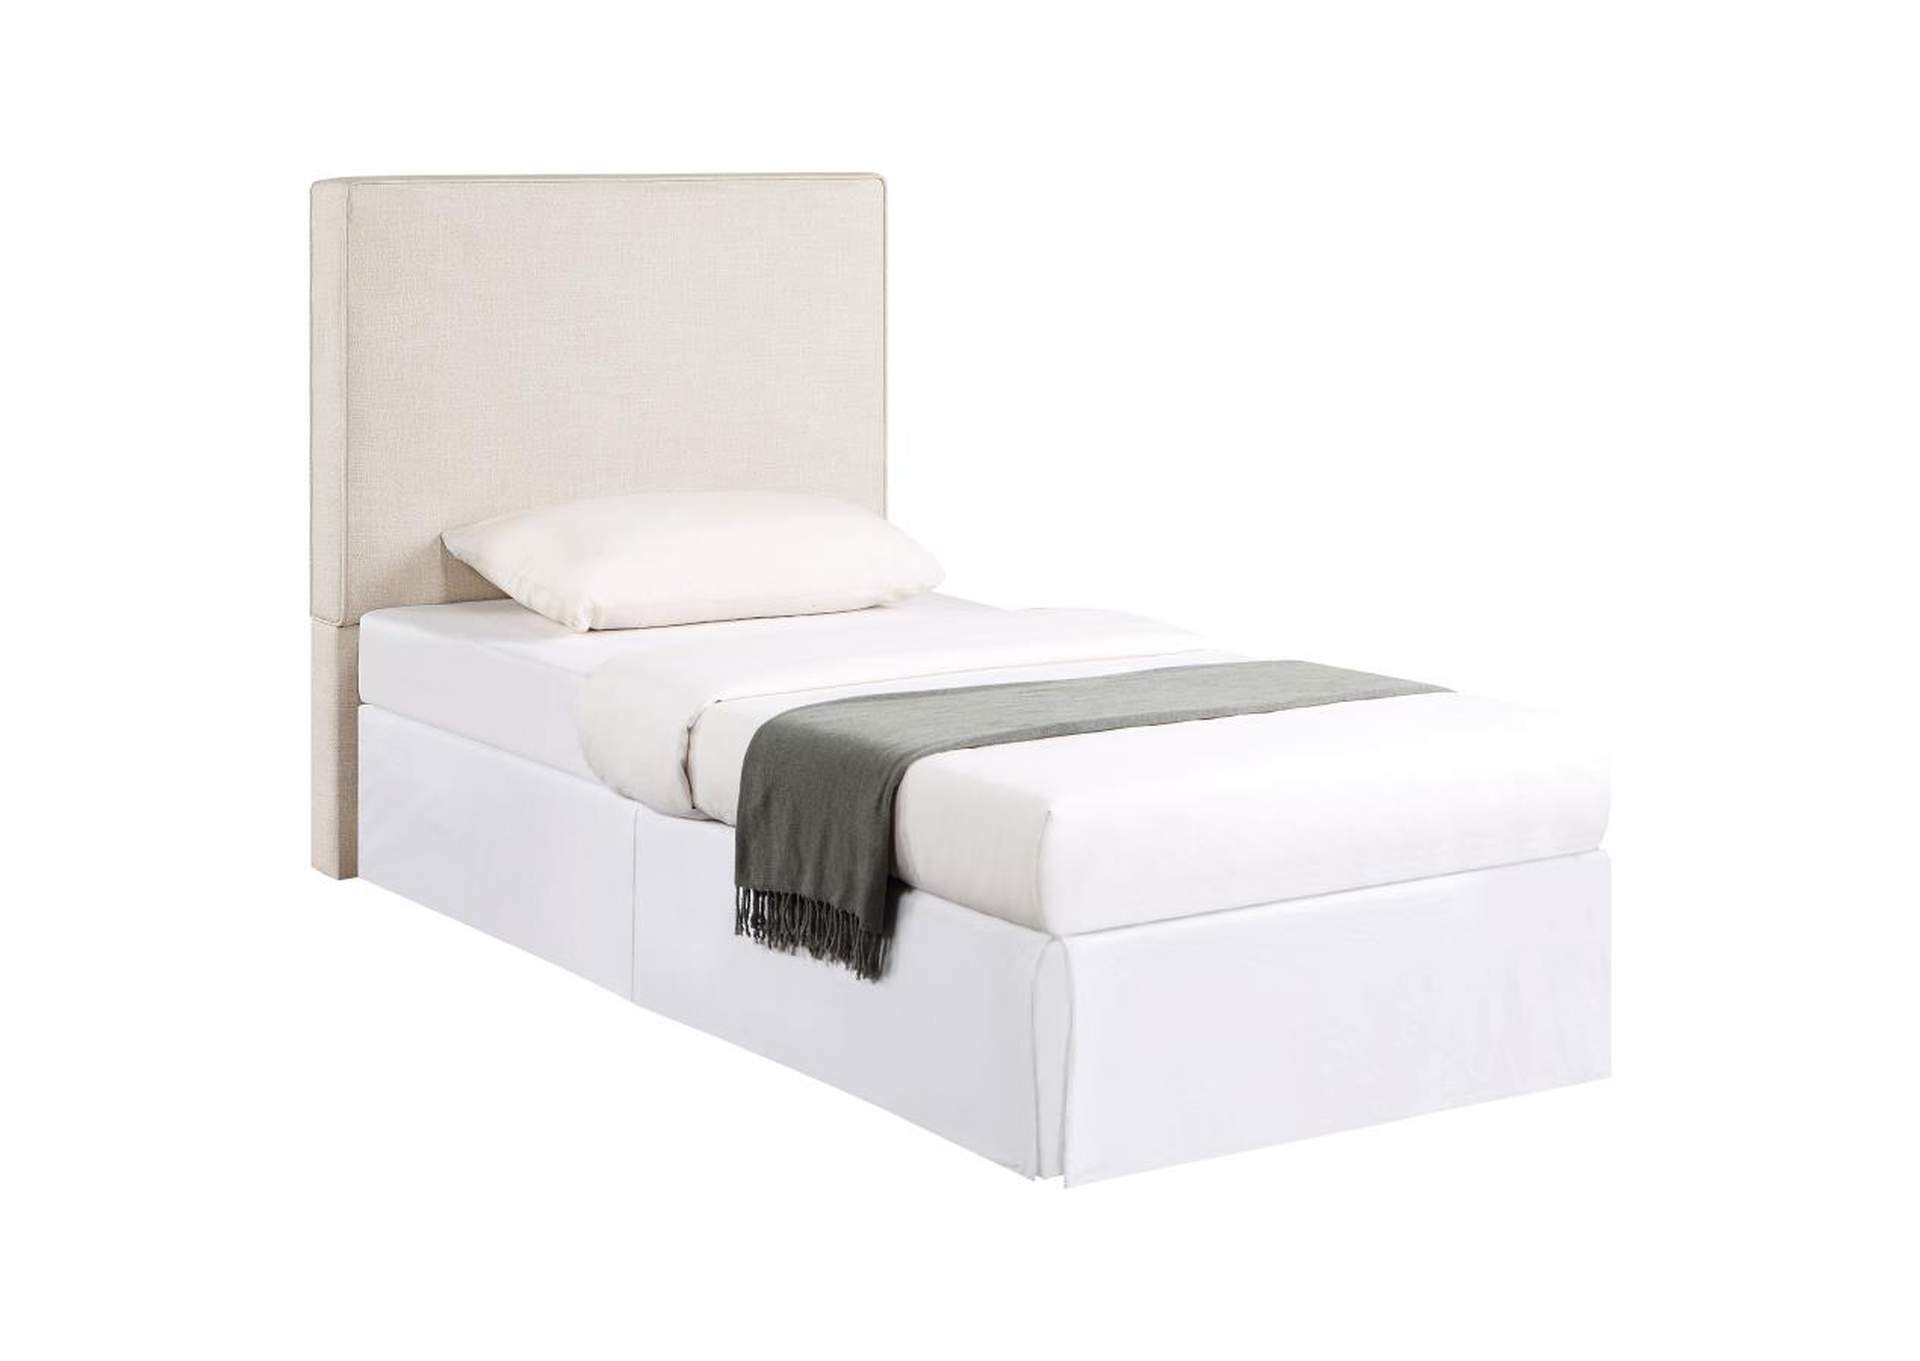 Kosmo Rectangular Upholstered Headboard Sand,Coaster Furniture